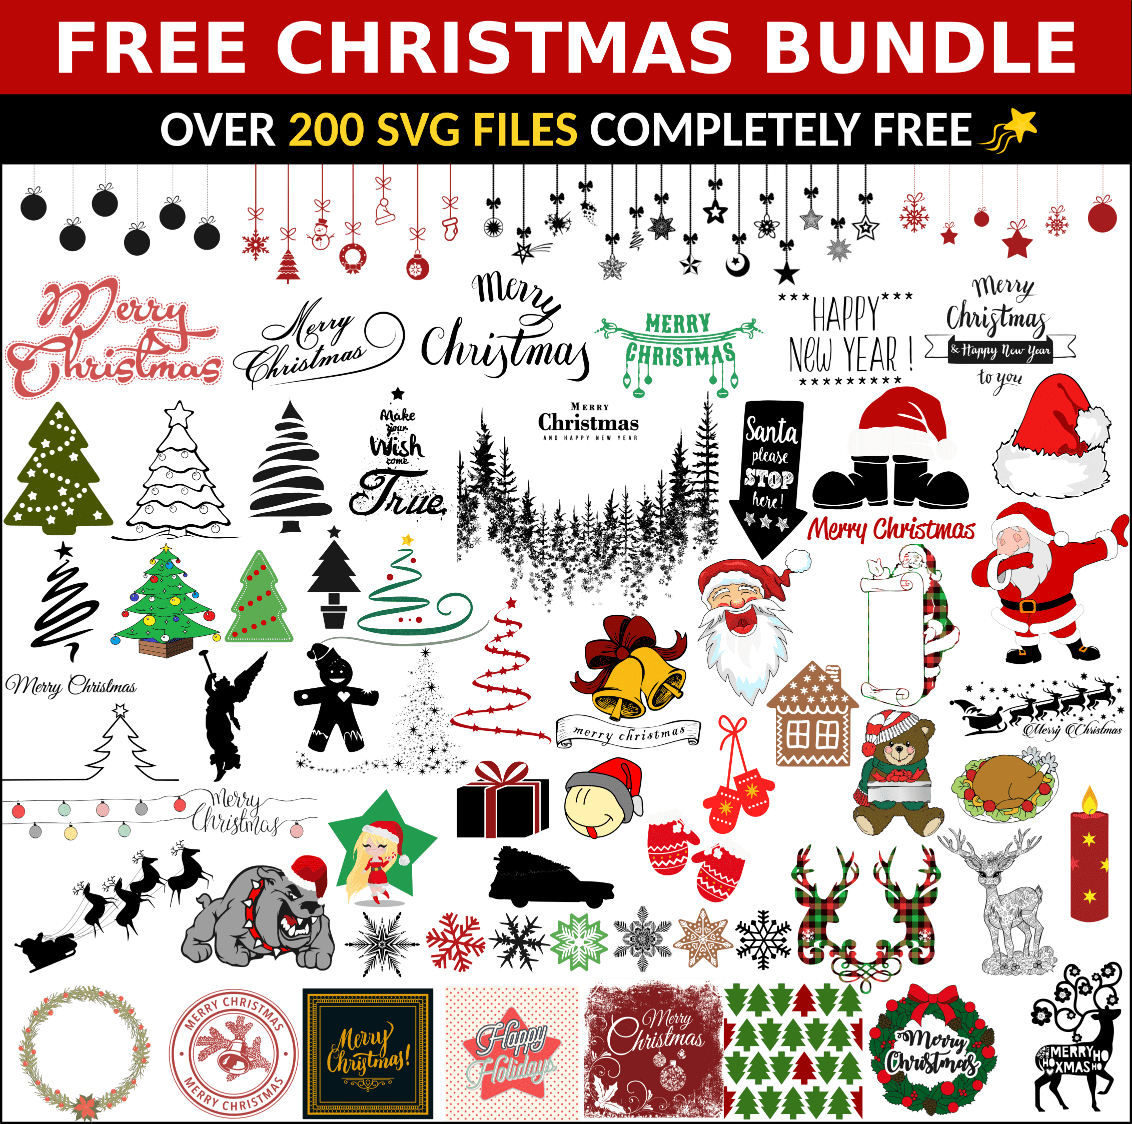 Download Christmas Bundle - Over 200 Free SVG Files - SvgHeart.com